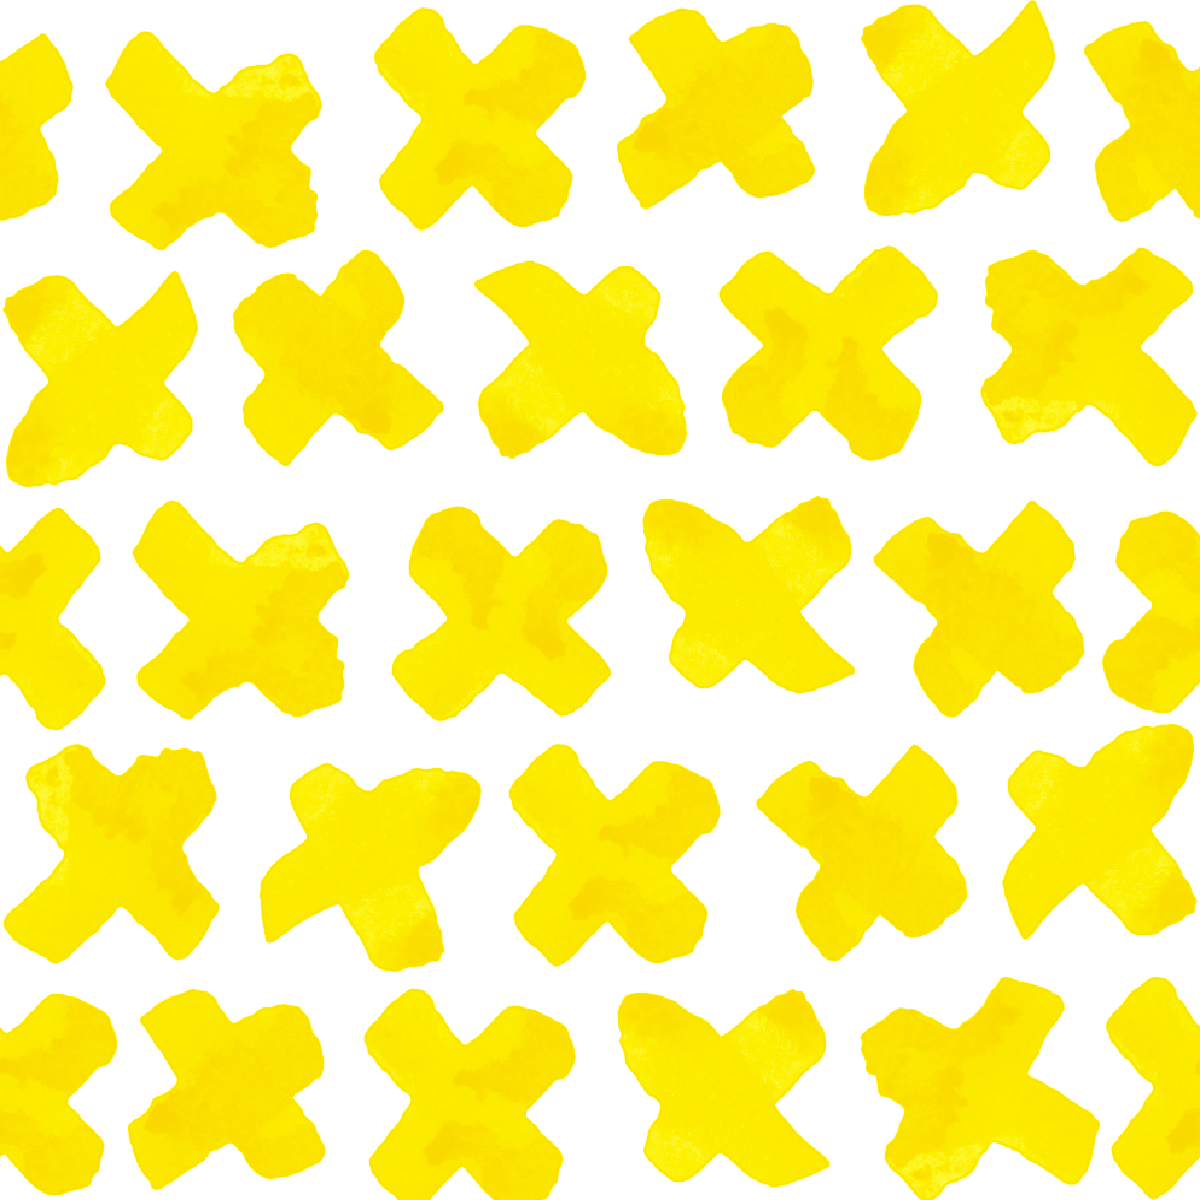 Wallpaper Double Roll / Yellow X's Wallpaper dombezalergii